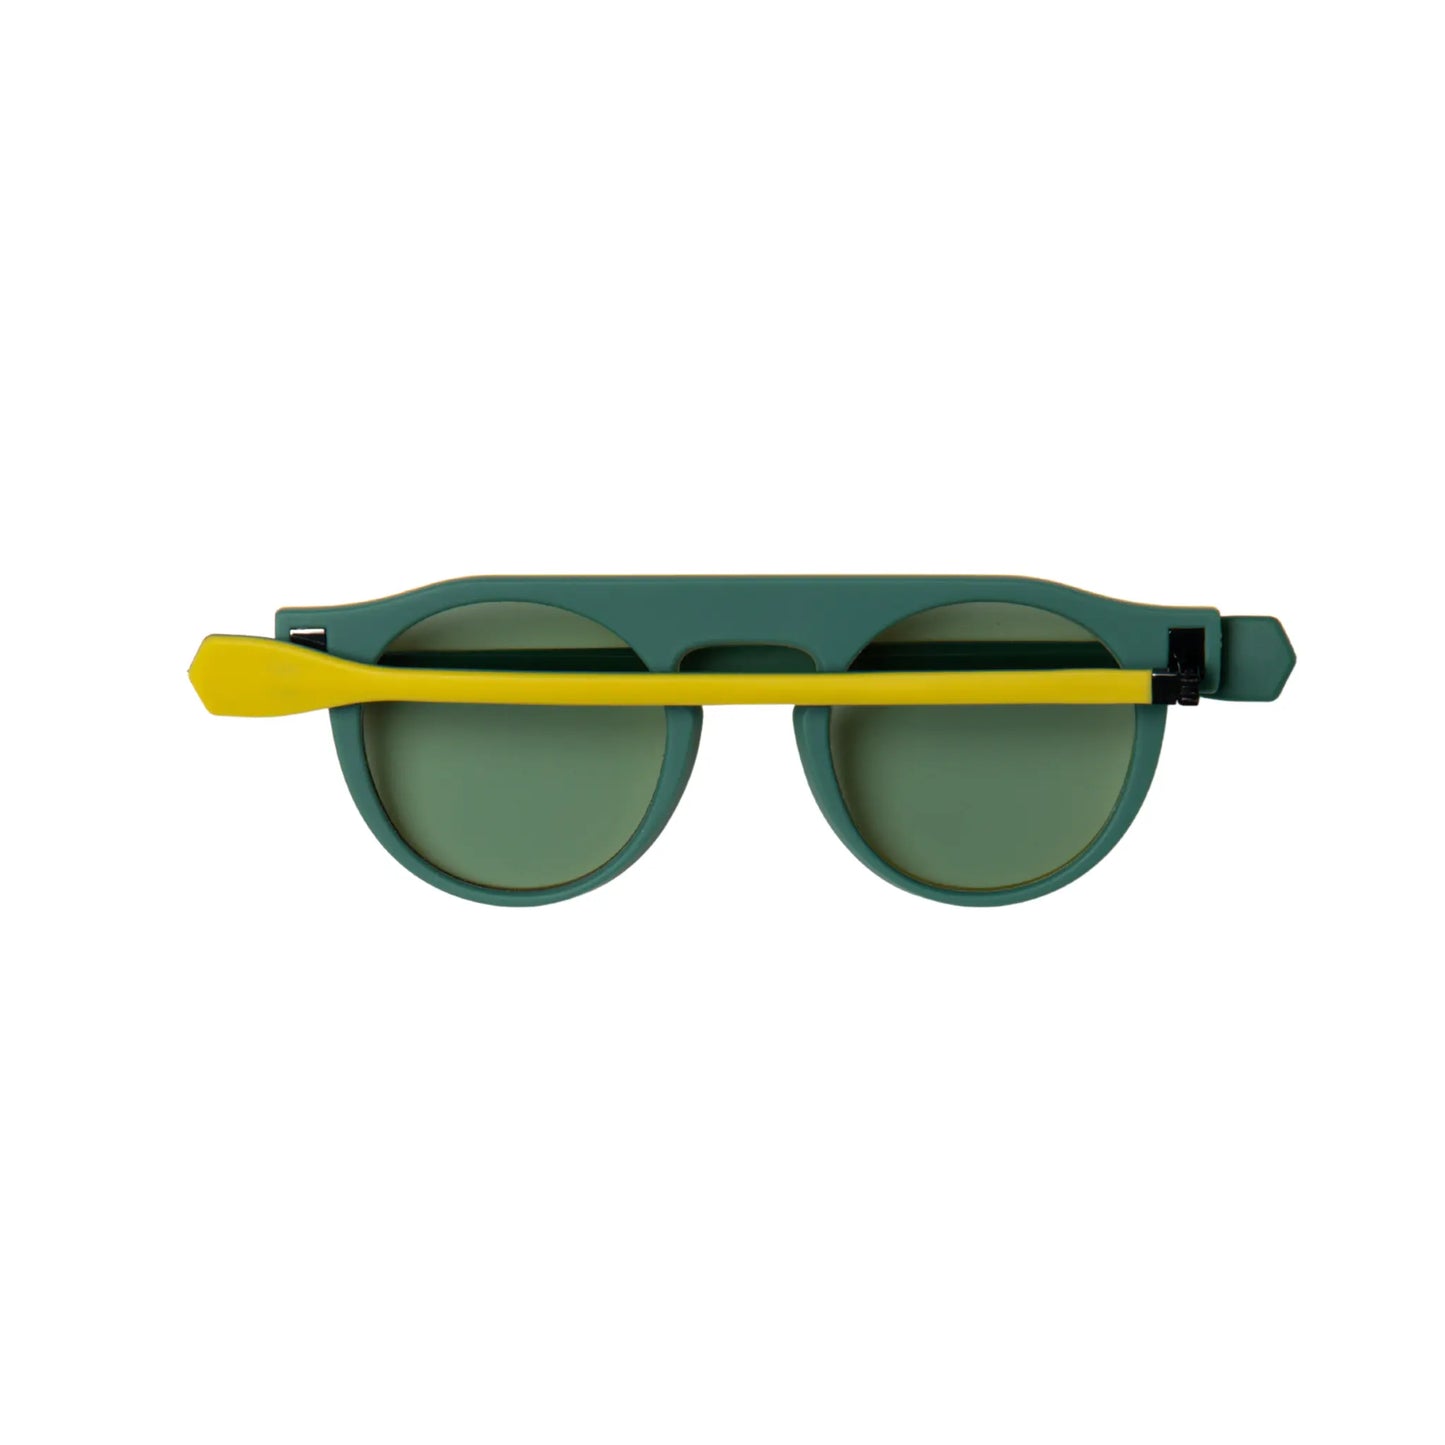 Reverso sunglasses green & yellow reversible & ultra light back view